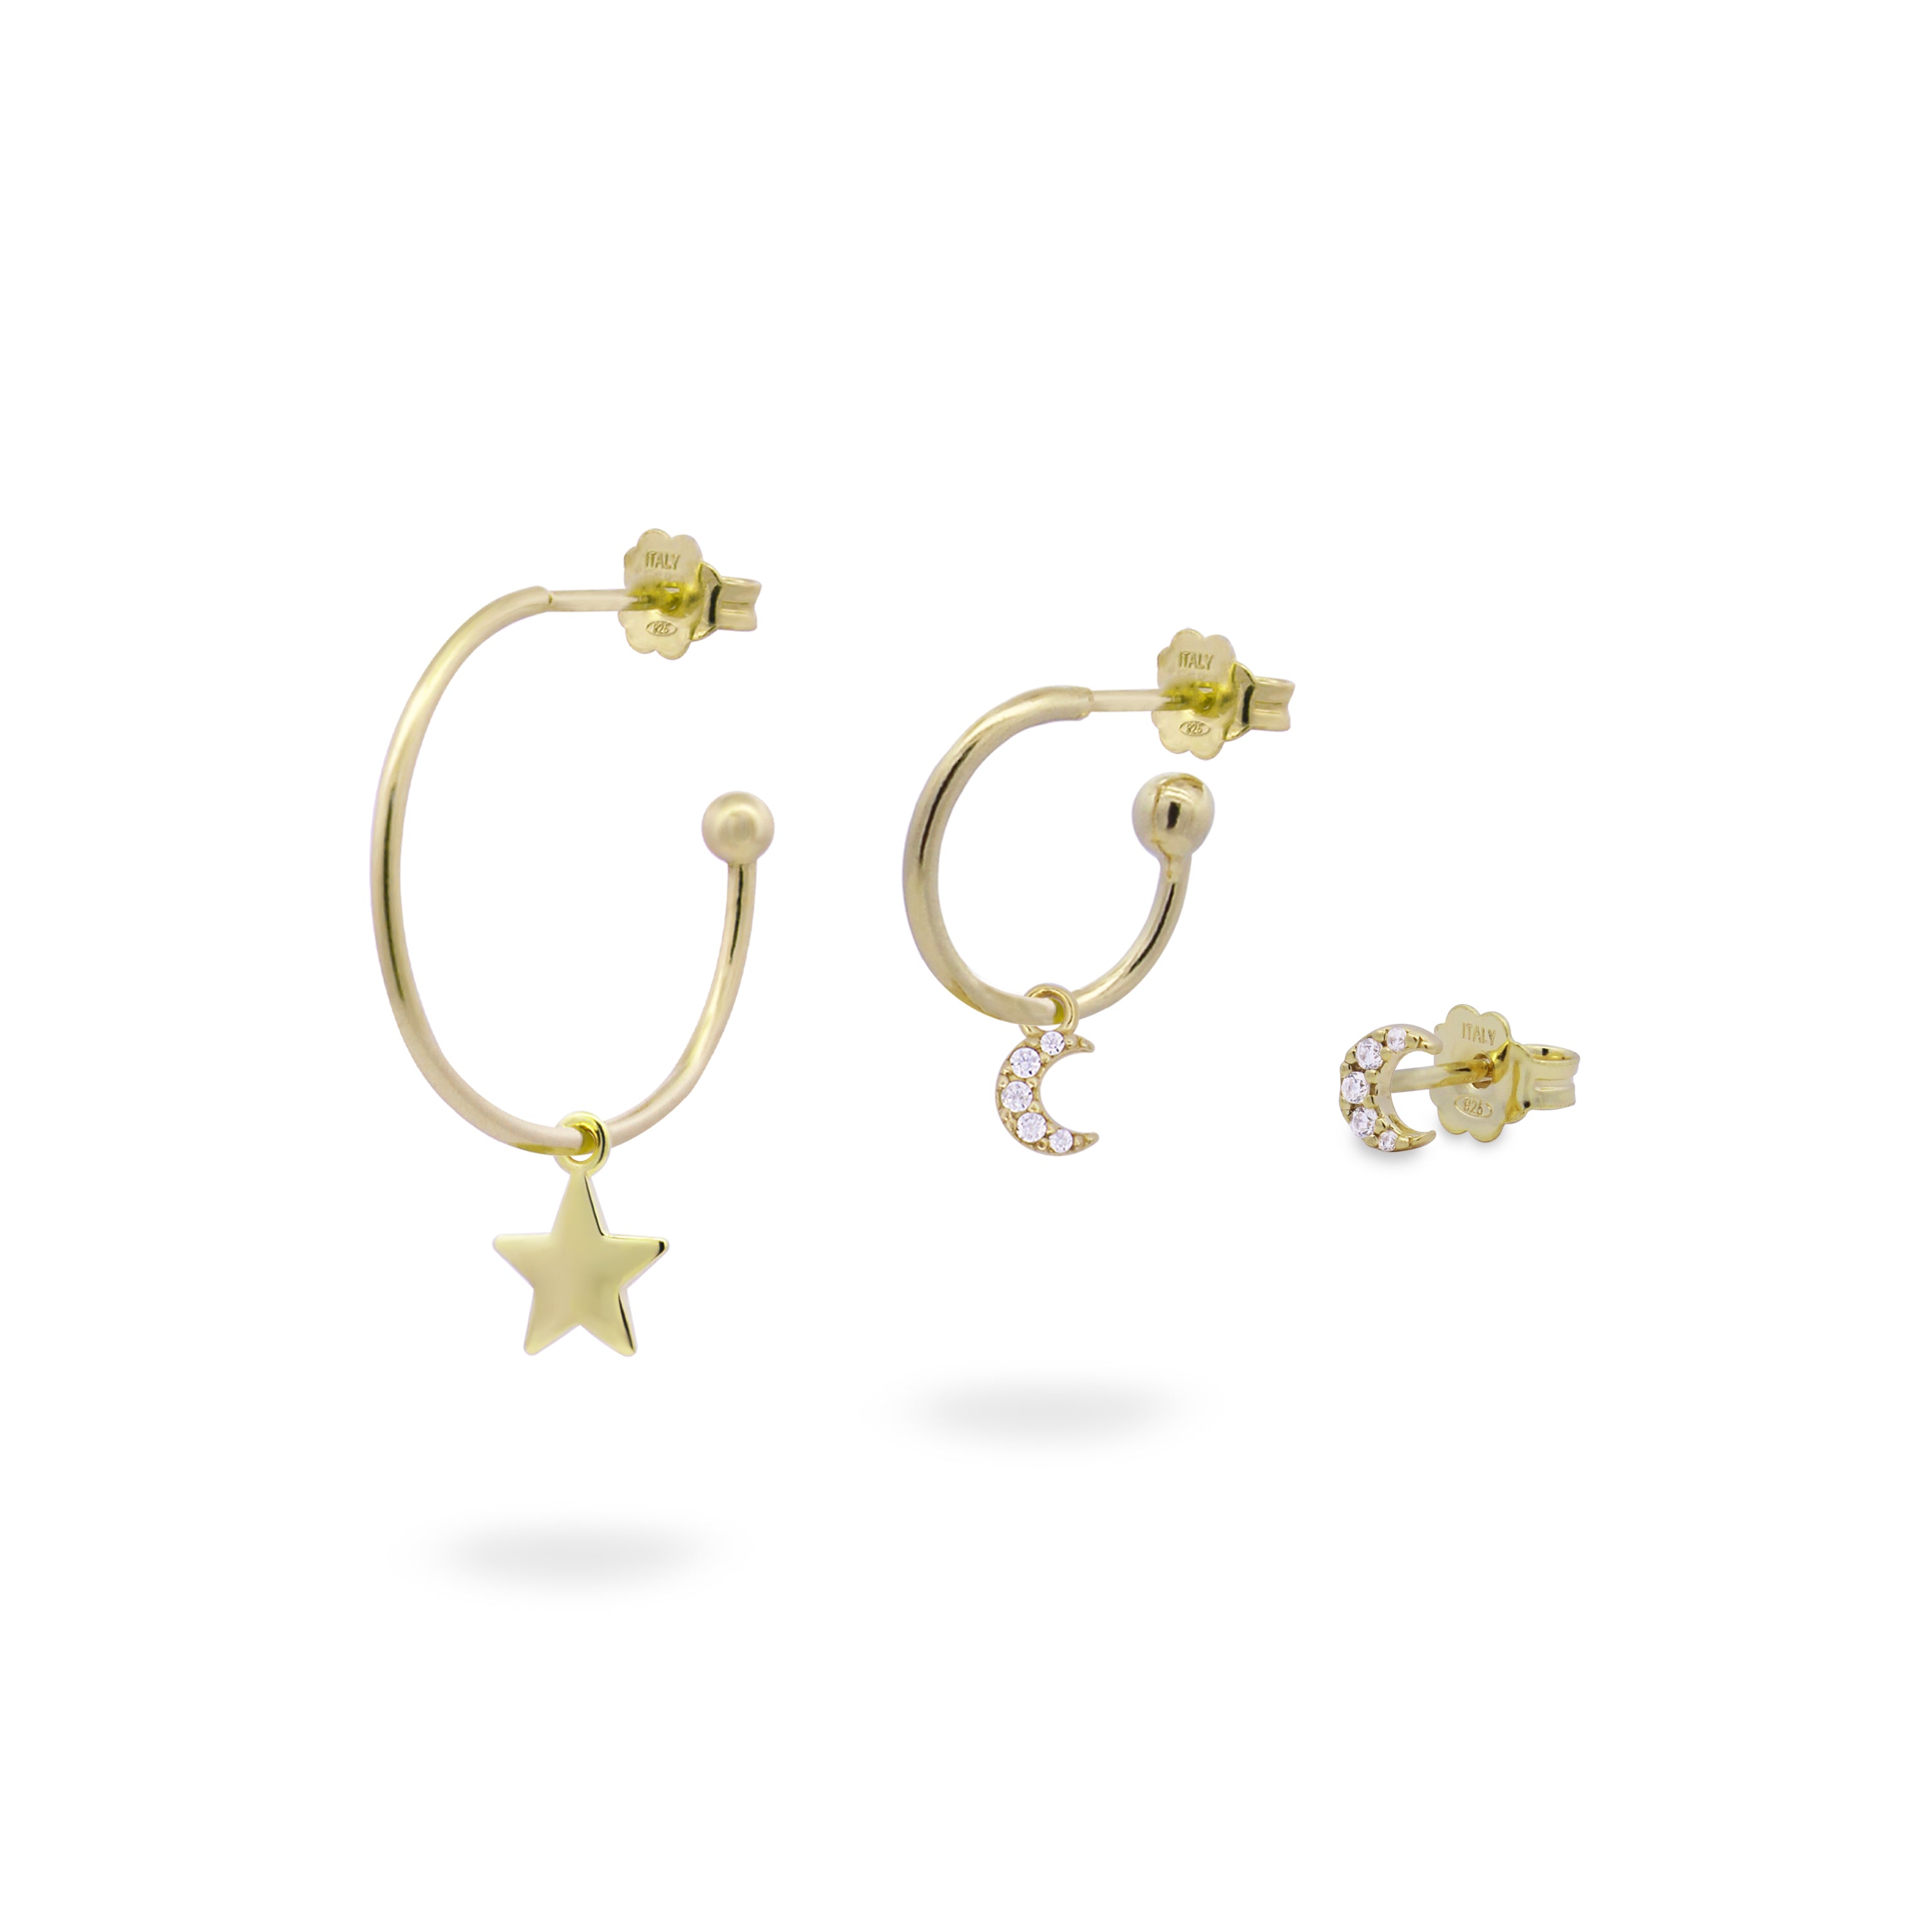 3 Set Earrings Pieces - Star / Moon / Moon